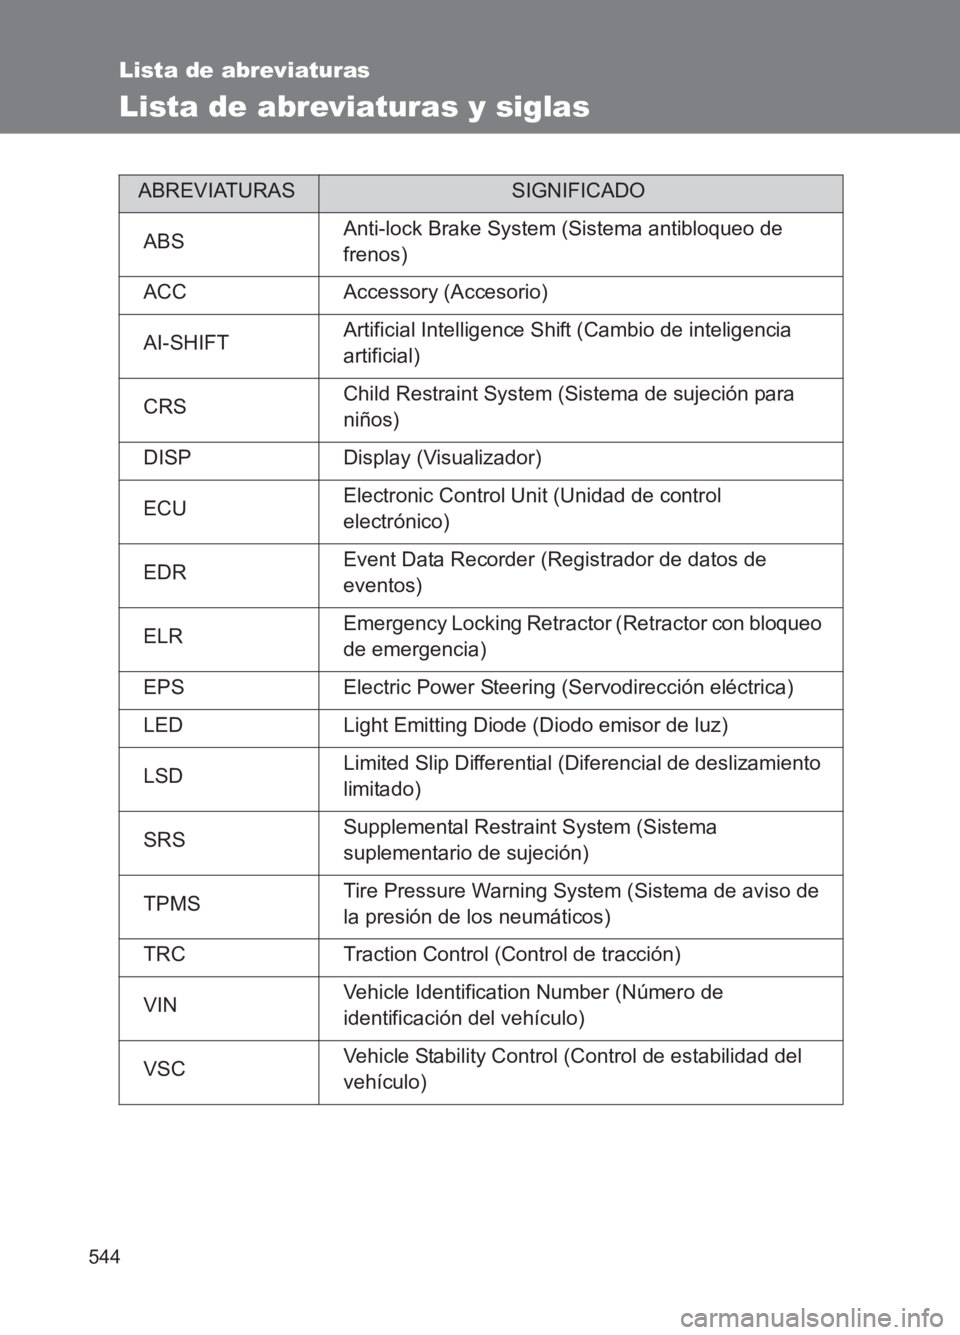 TOYOTA GT86 2017  Manuale de Empleo (in Spanish) 544
86_ES (OM18075S)
Lista de abreviaturas
Lista de abreviaturas y siglas
ABREVIATURASSIGNIFICADO
ABS Anti-lock Brake System (Sistema antibloqueo de 
frenos)
ACC Accessory (Accesorio)
AI-SHIFT Artific